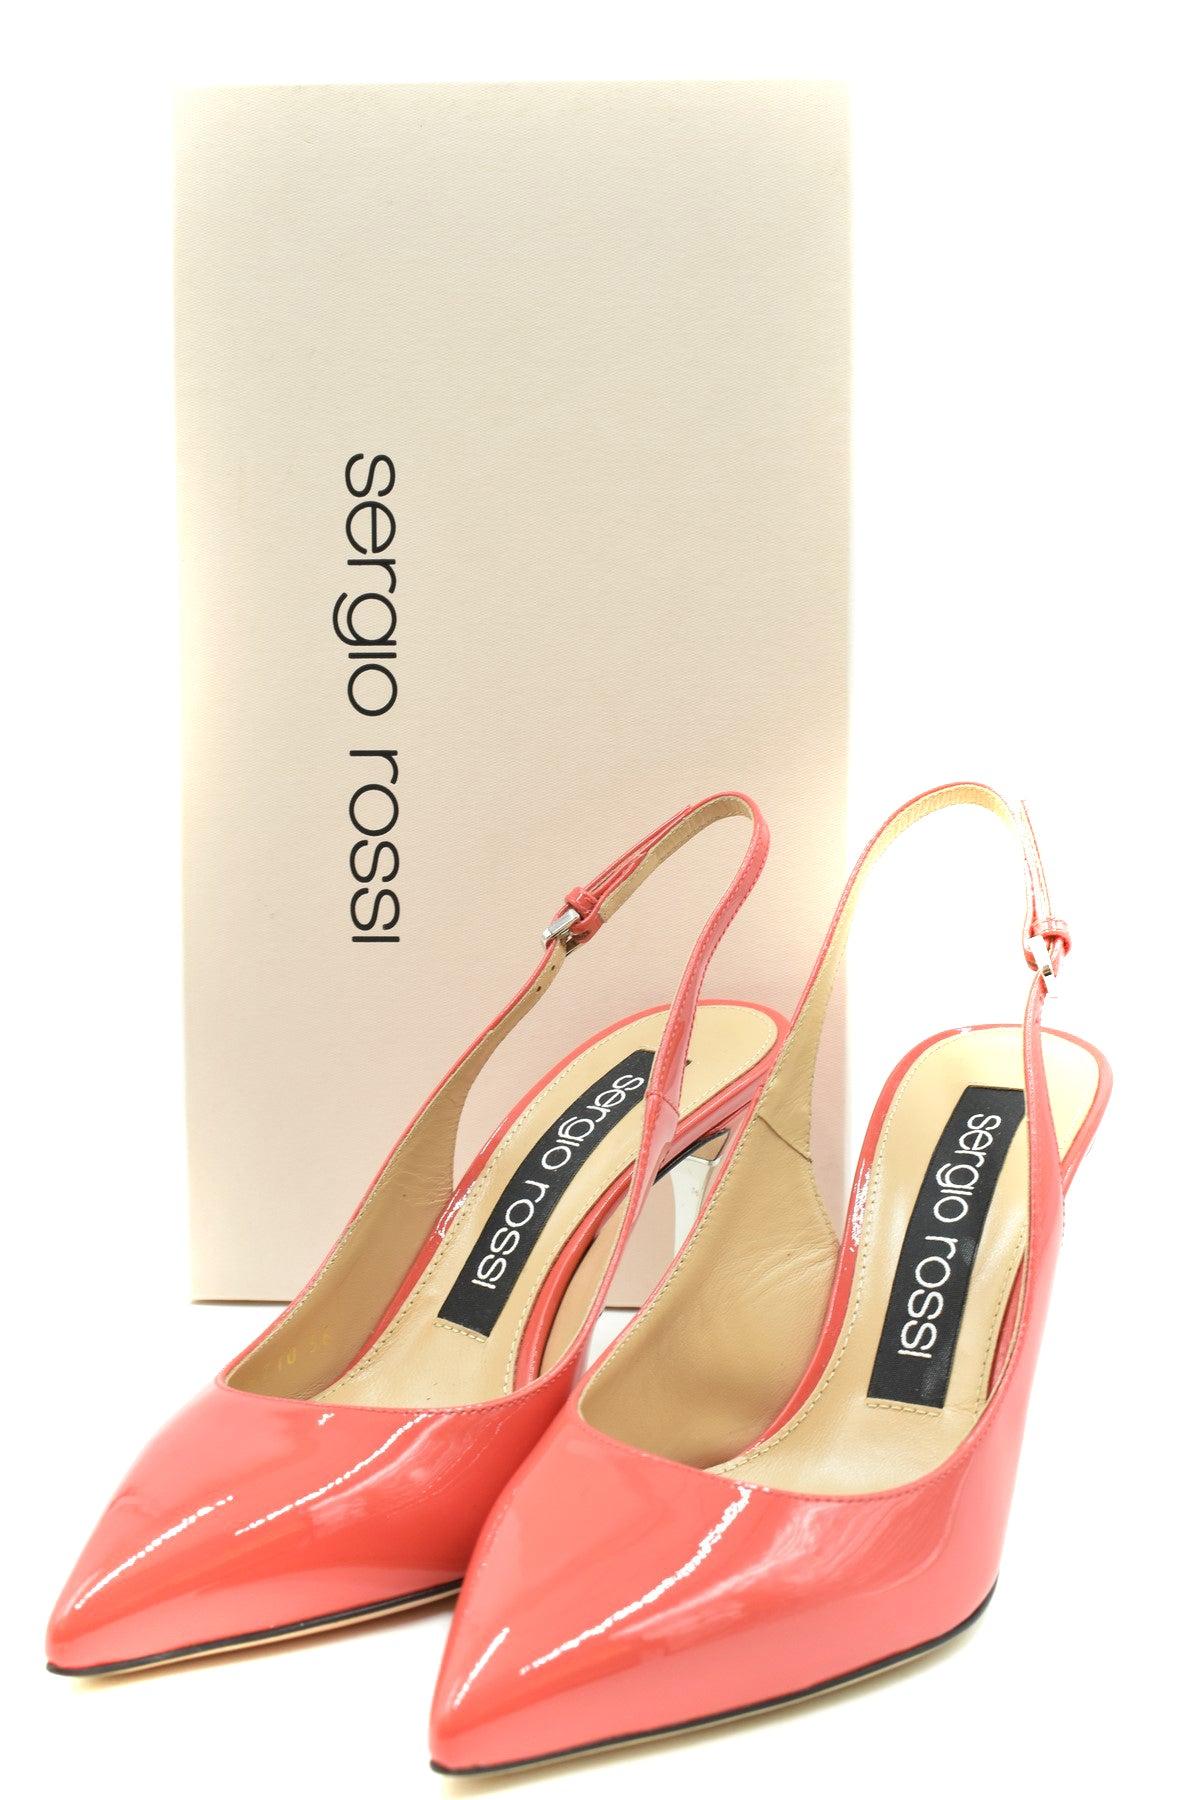 Sergio Rossi Shoes in Orange - Save 20% - Lyst